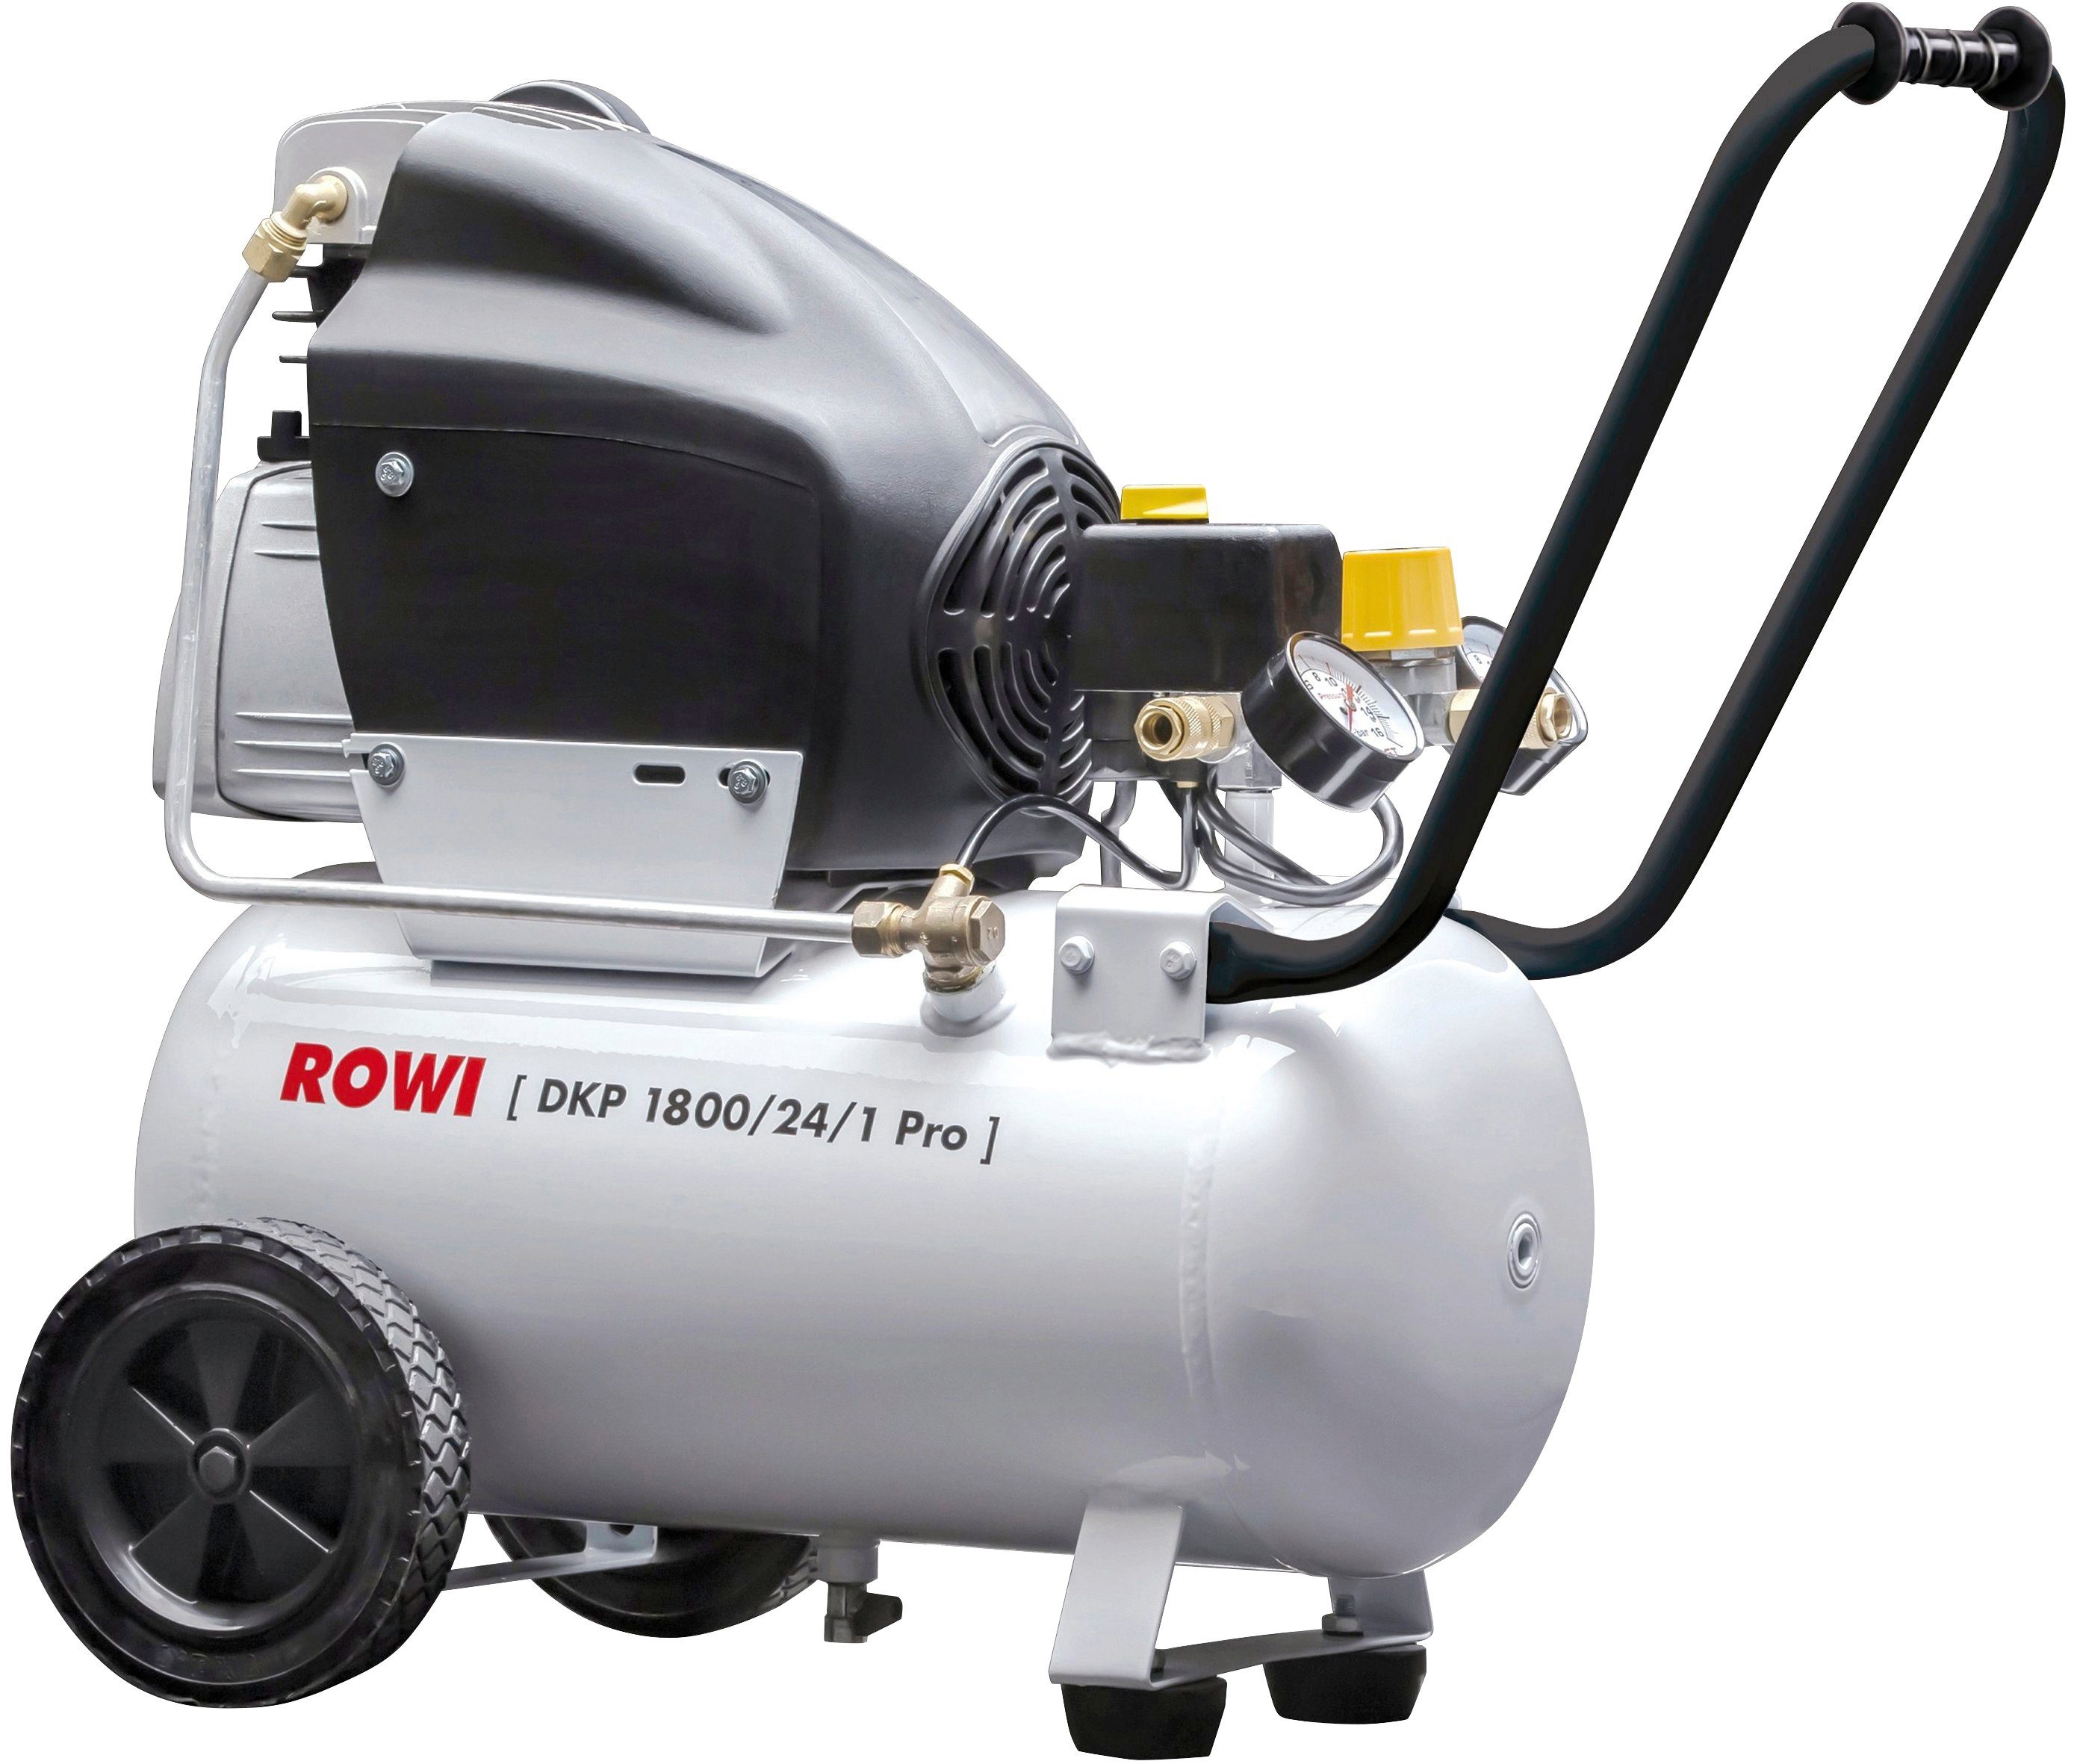 ROWI Kompressor DKP 1800/24/1 Pro, 1800 W, max. 10 bar, 24 l | Druckluftgeräte